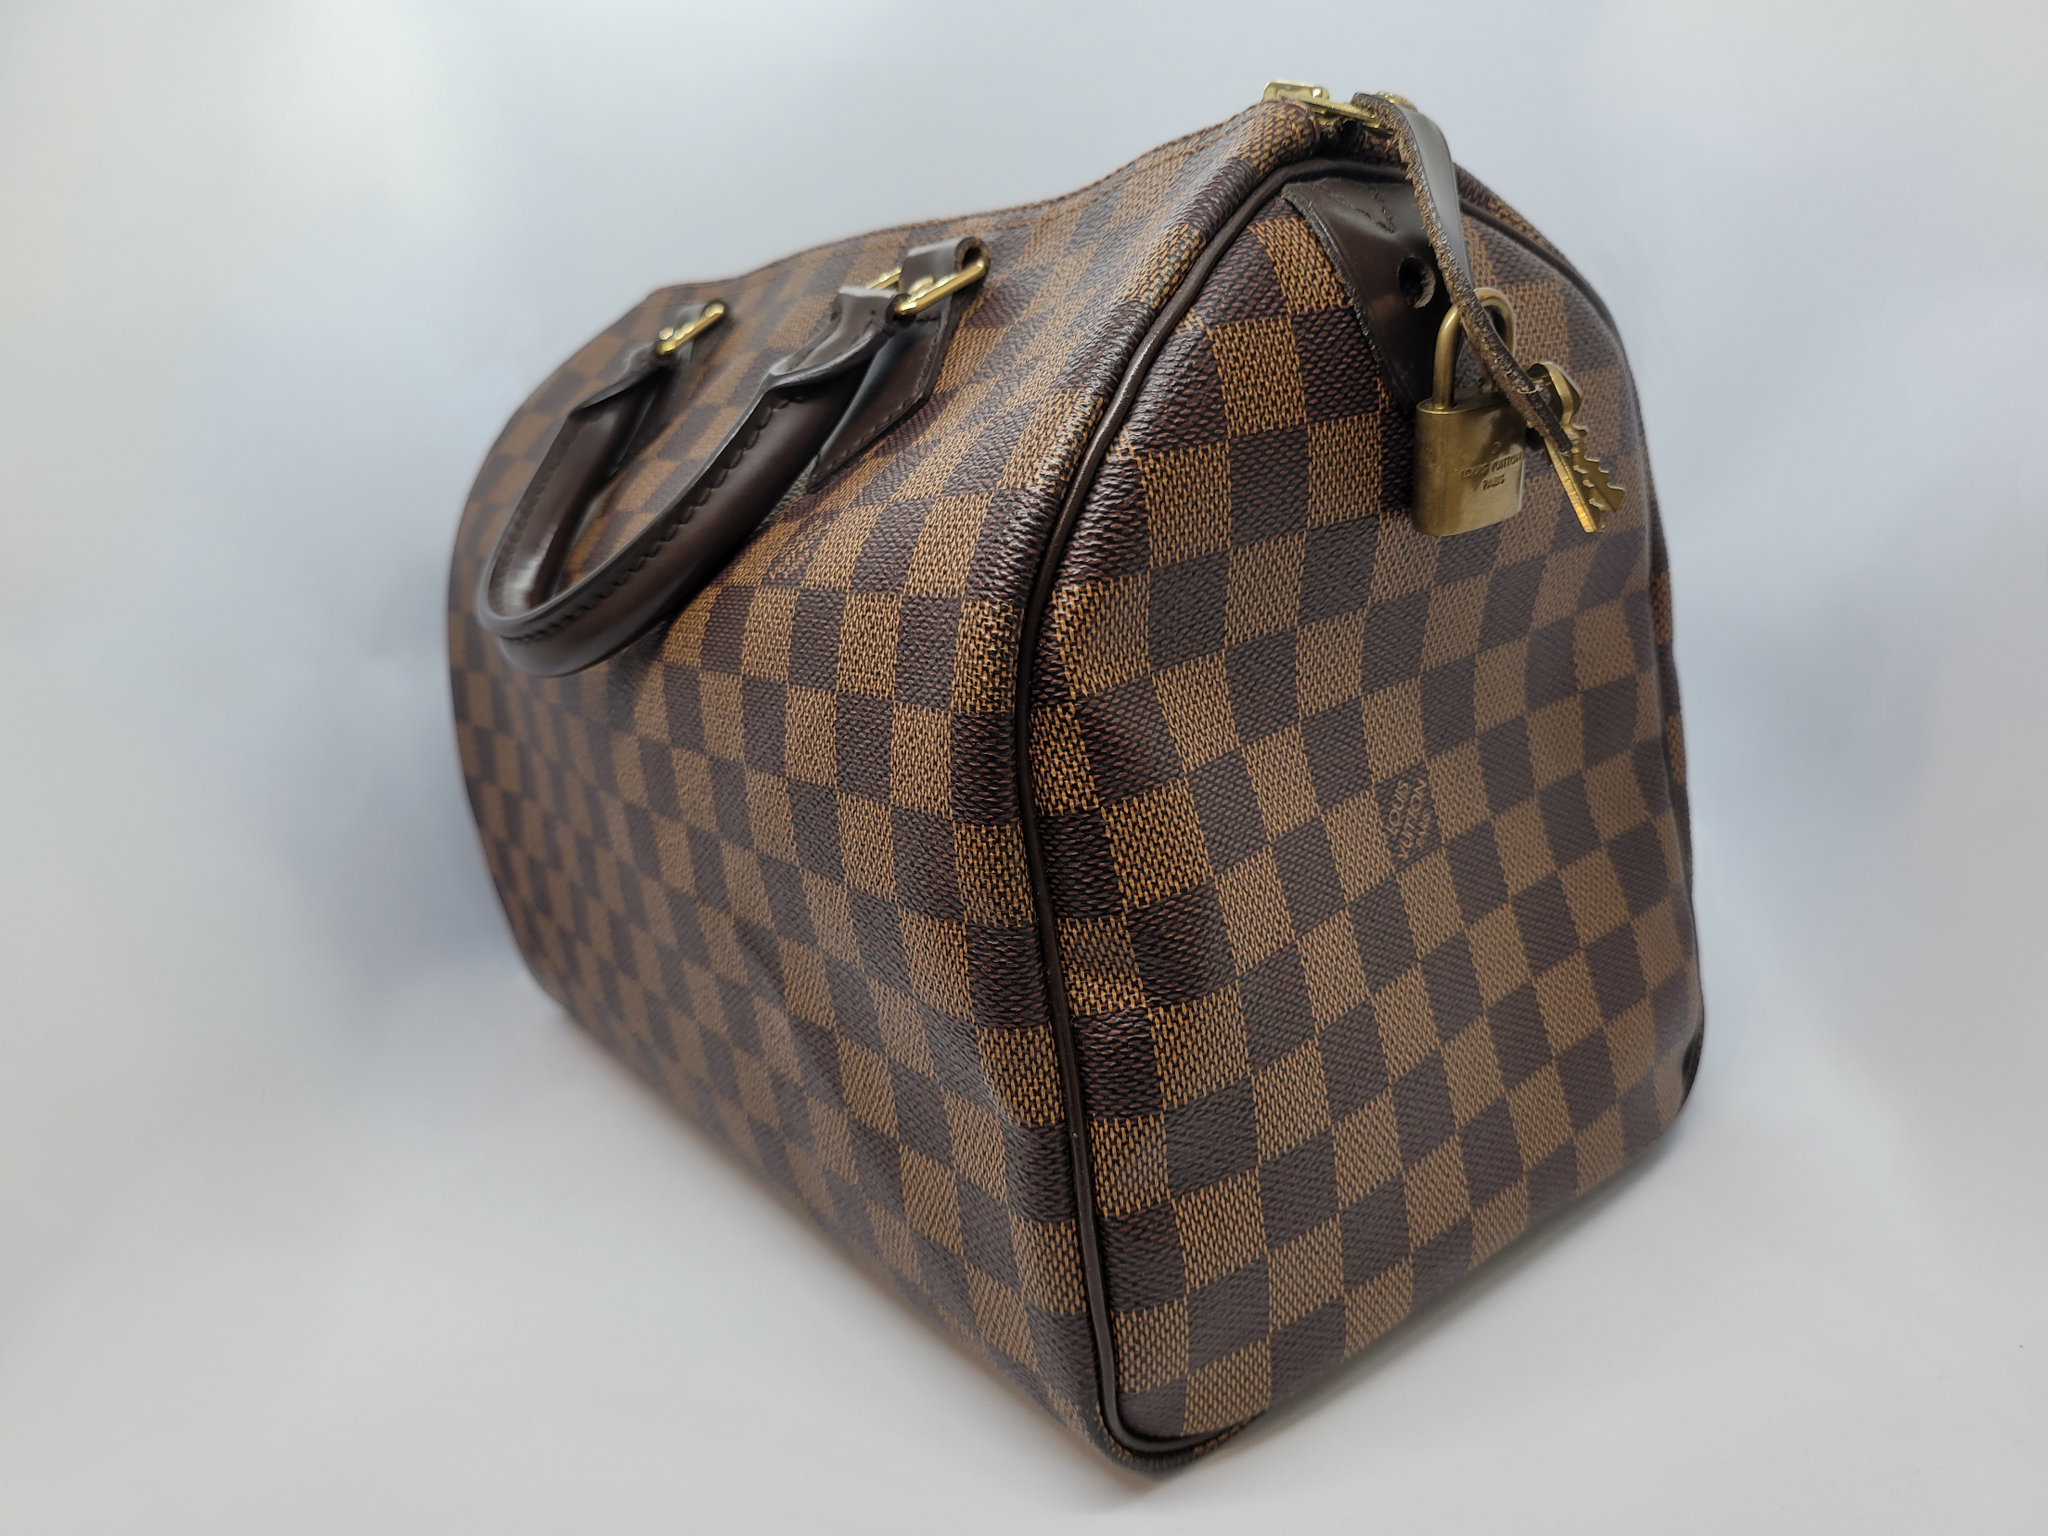 Preloved Louis Vuitton Limited Edition Monogram Game On Speedy 30 Bag –  KimmieBBags LLC